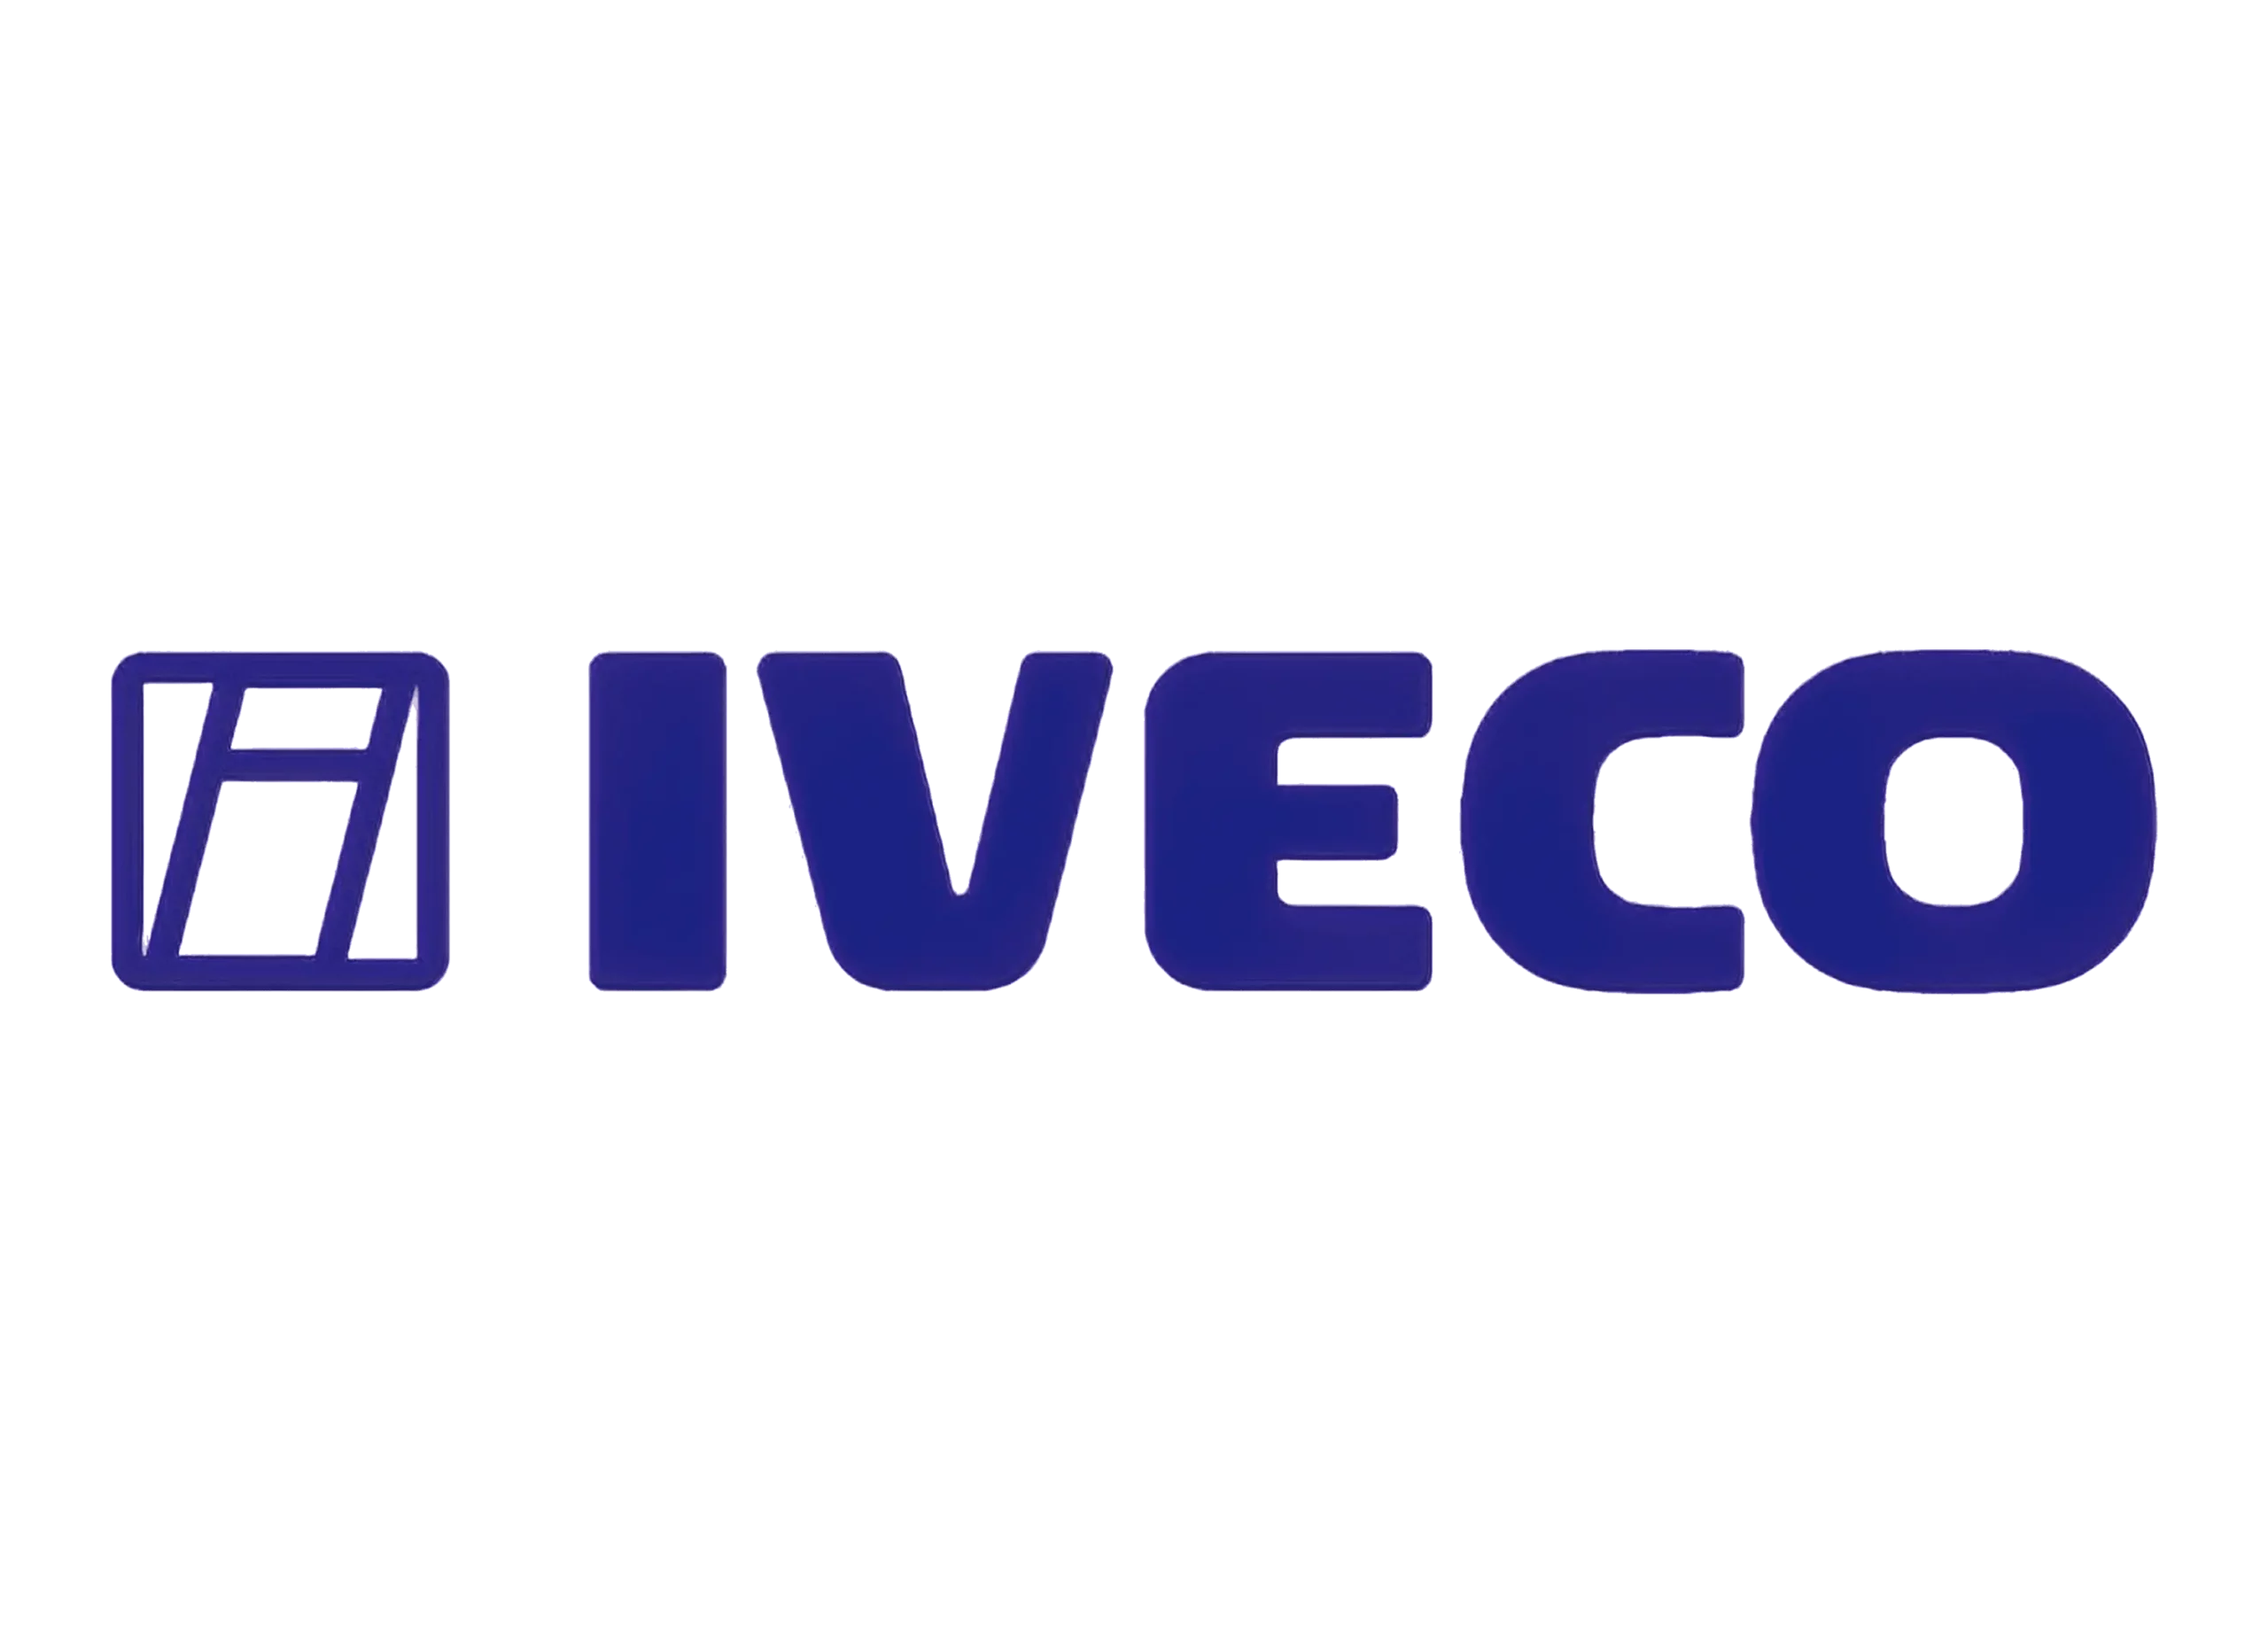 Iveco logo 1979-1980